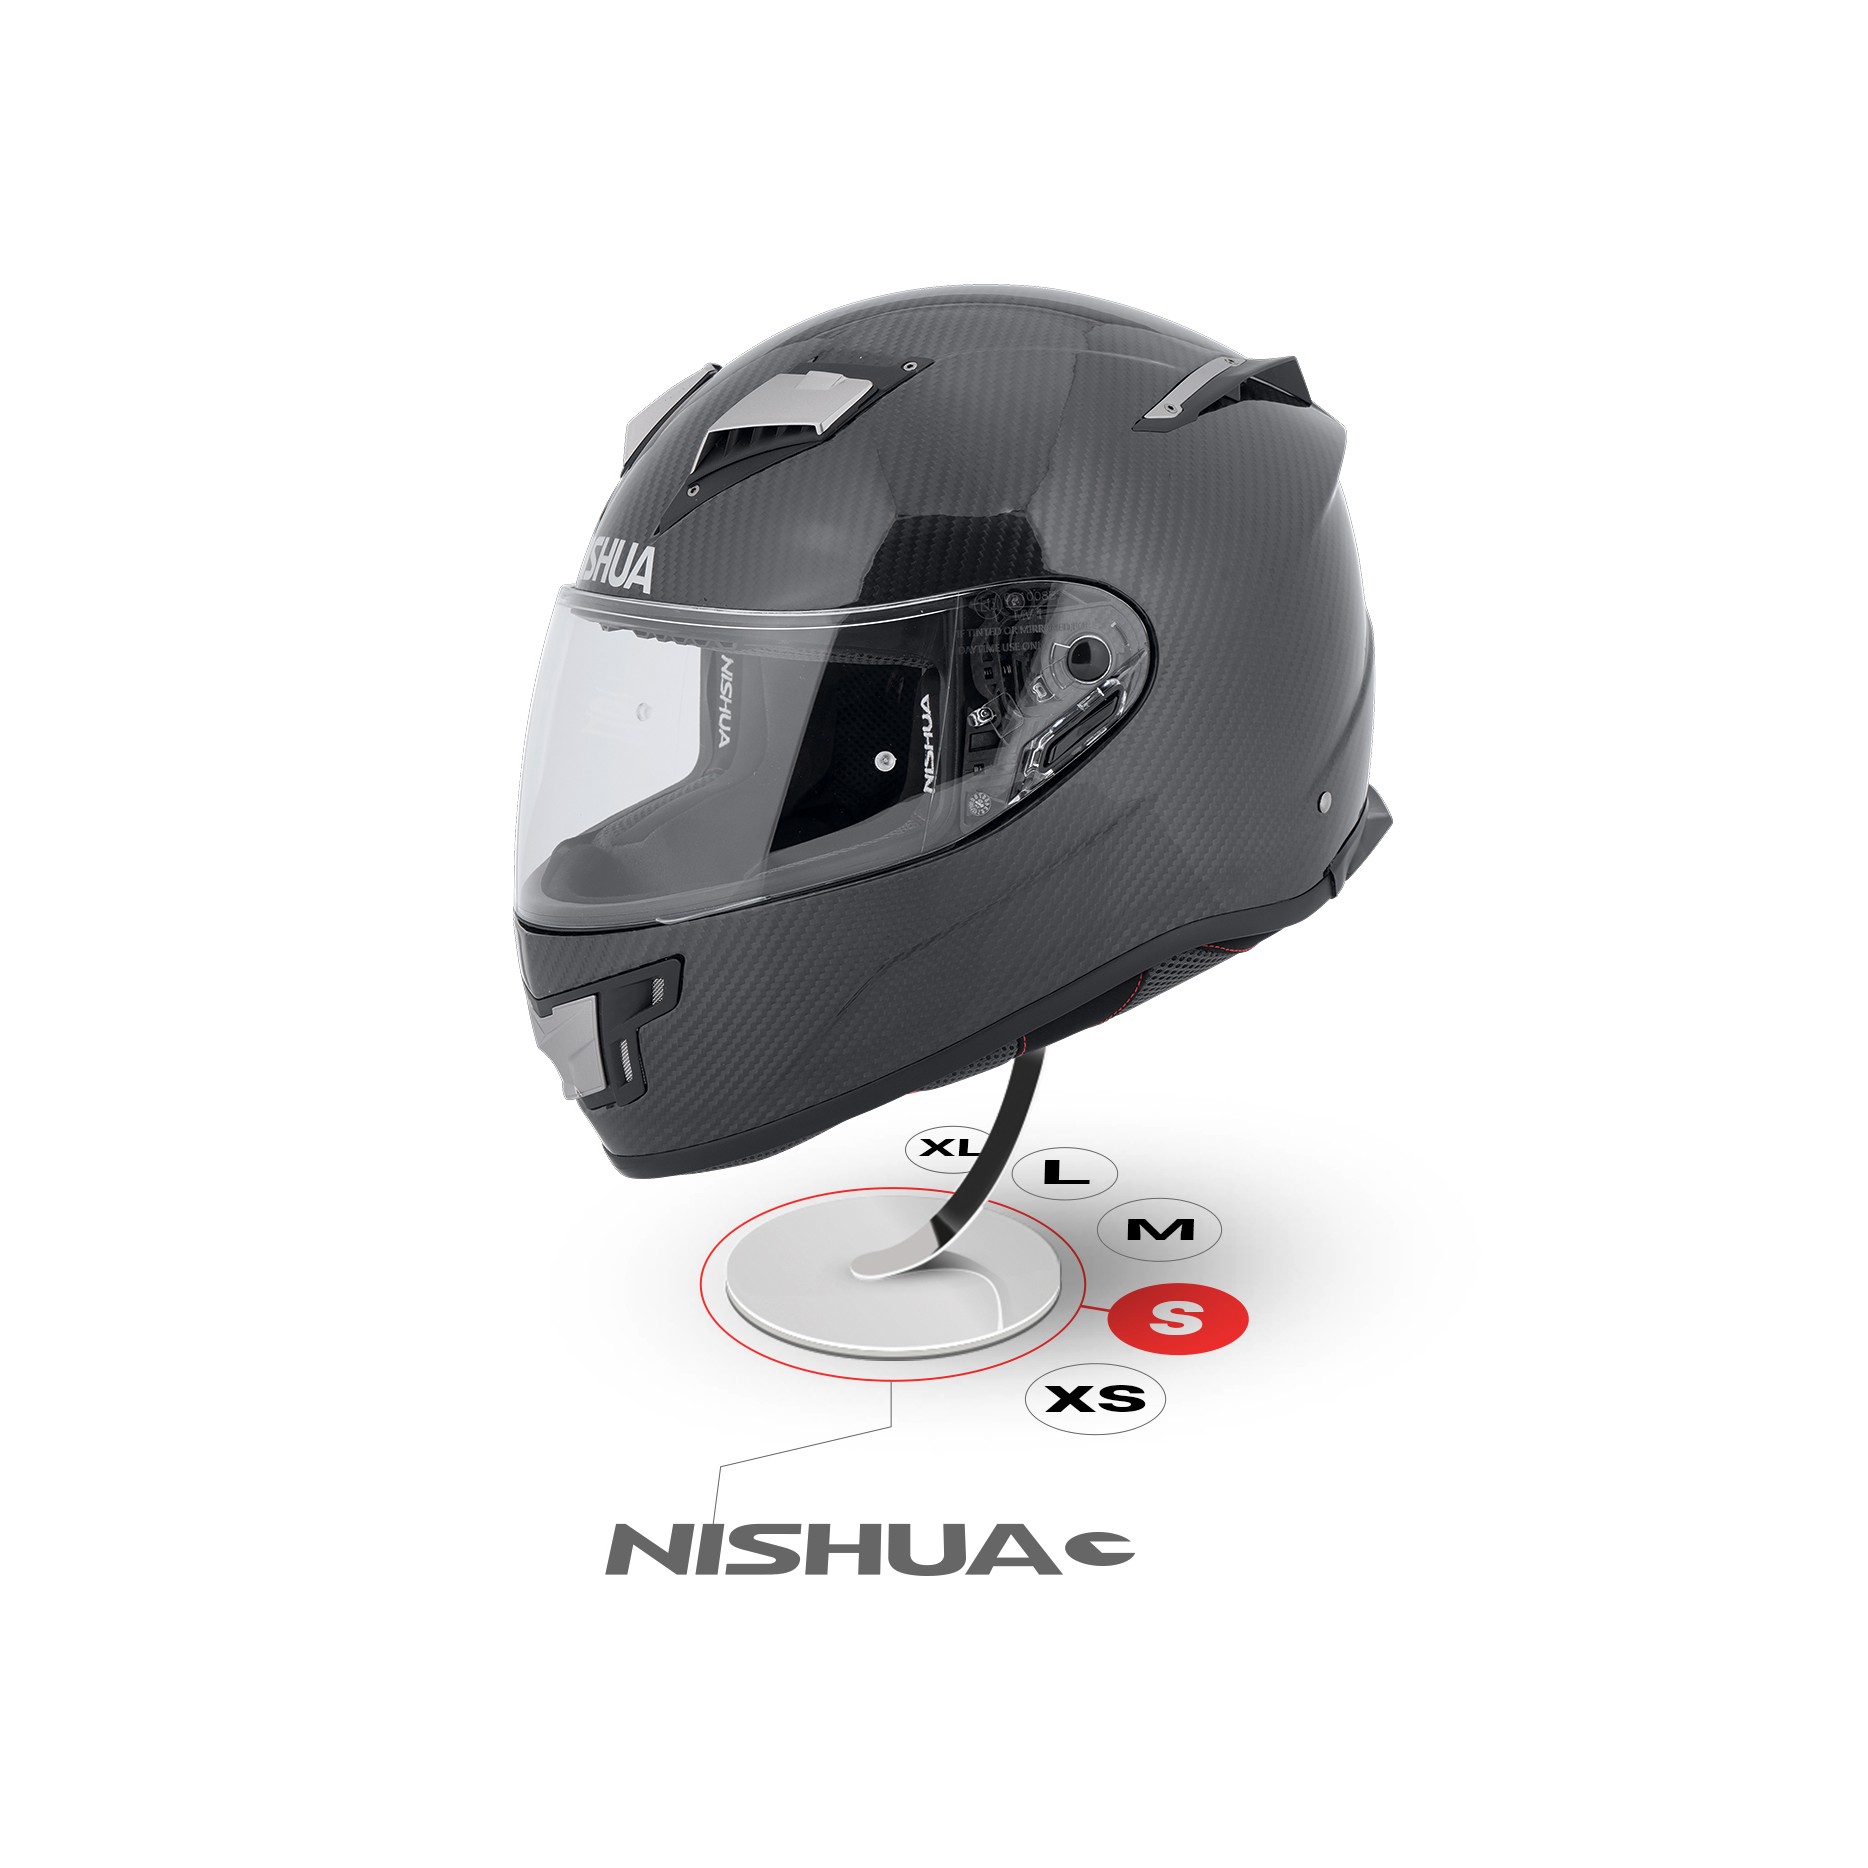 Nishua NRX-2 Carbon Full-Face-Helmet